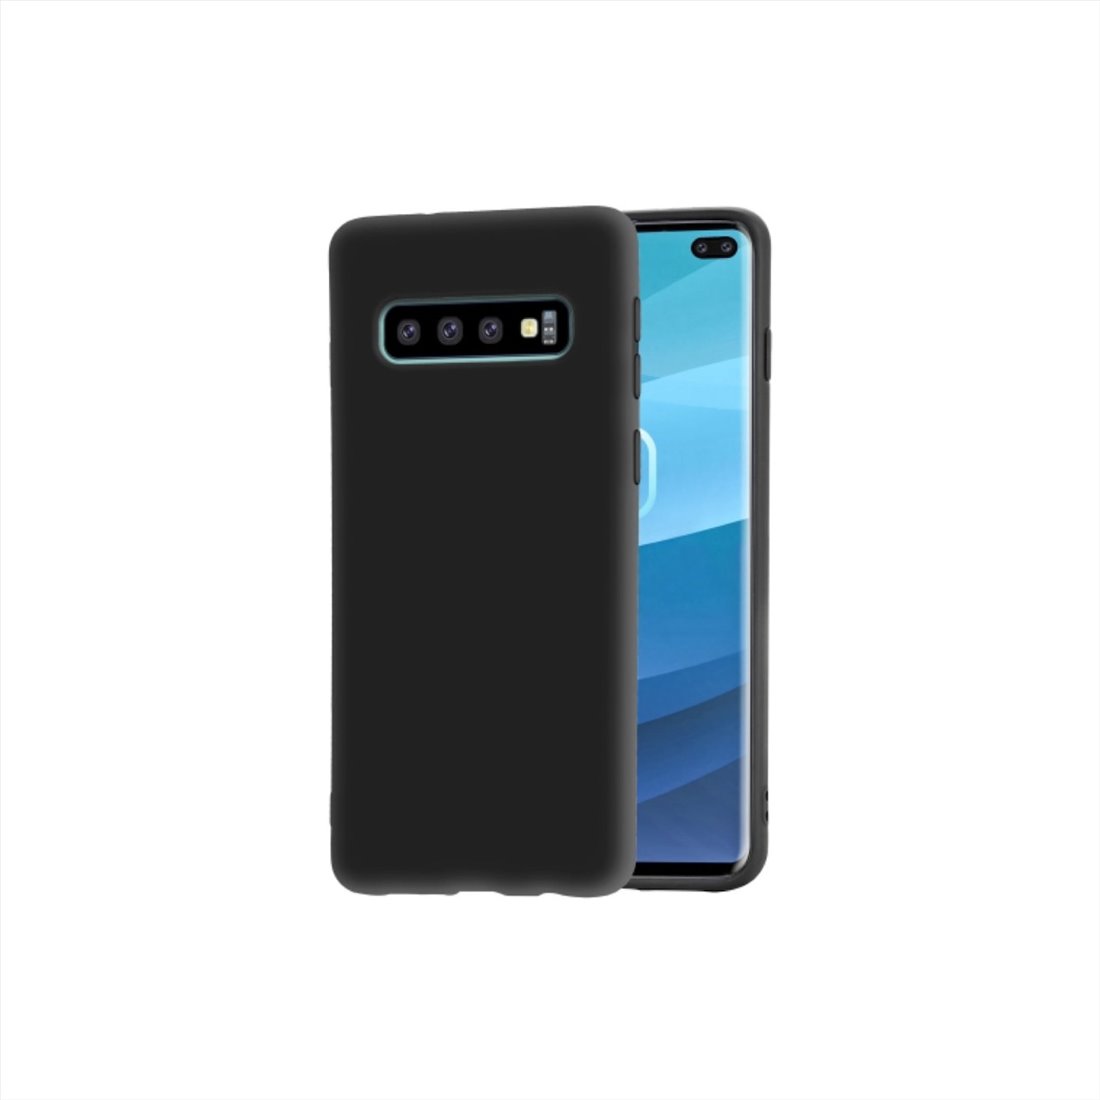 Samsung Galaxy S10 Plus Black Back Cover Smartphone Case